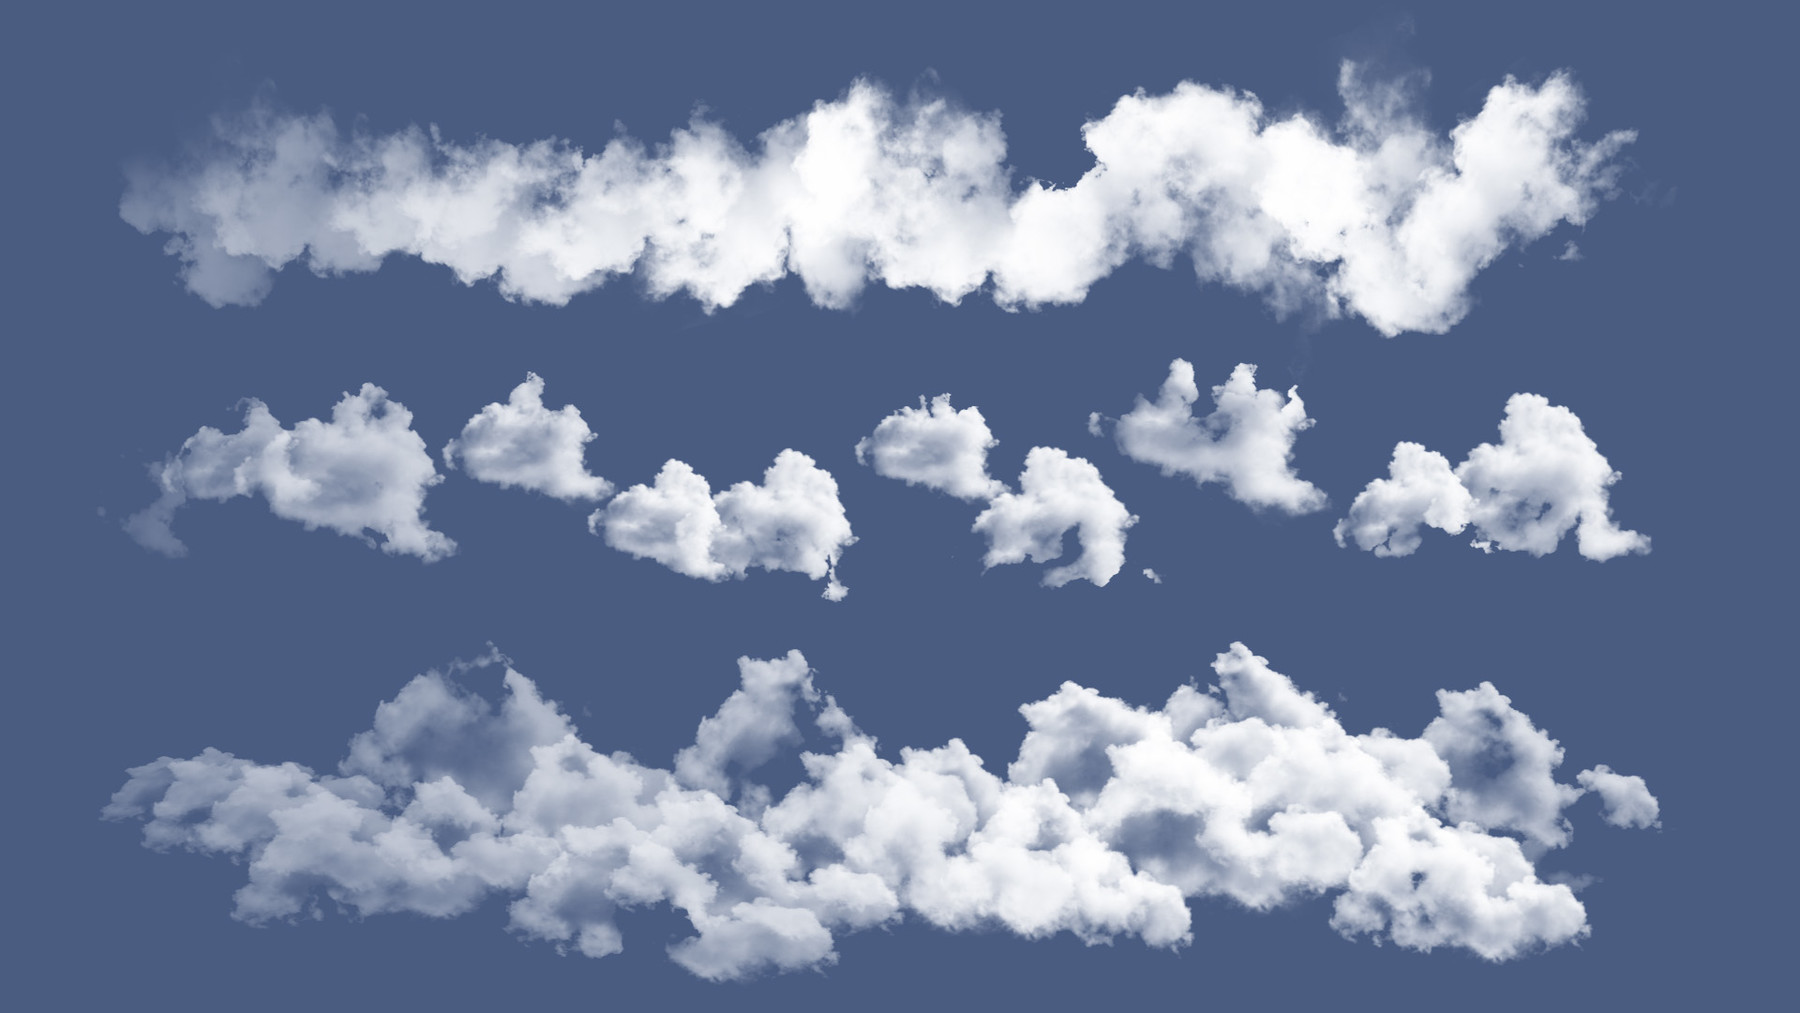 illustrator cloud brushes free download